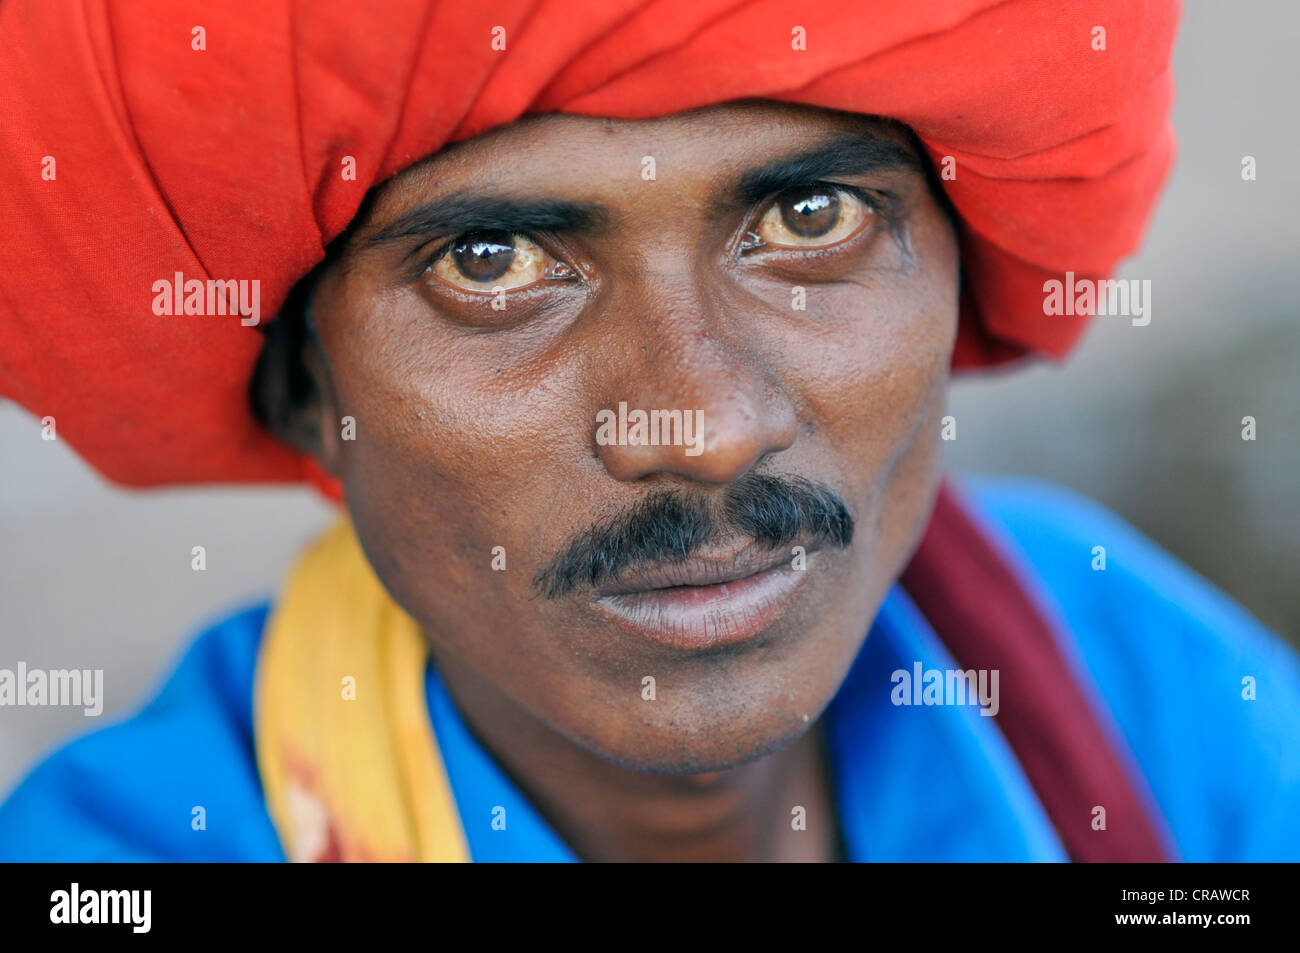 Man wearing a red turban and a blue shirt, Mandu, Madhya Pradesh, India, Asia Stock Photo